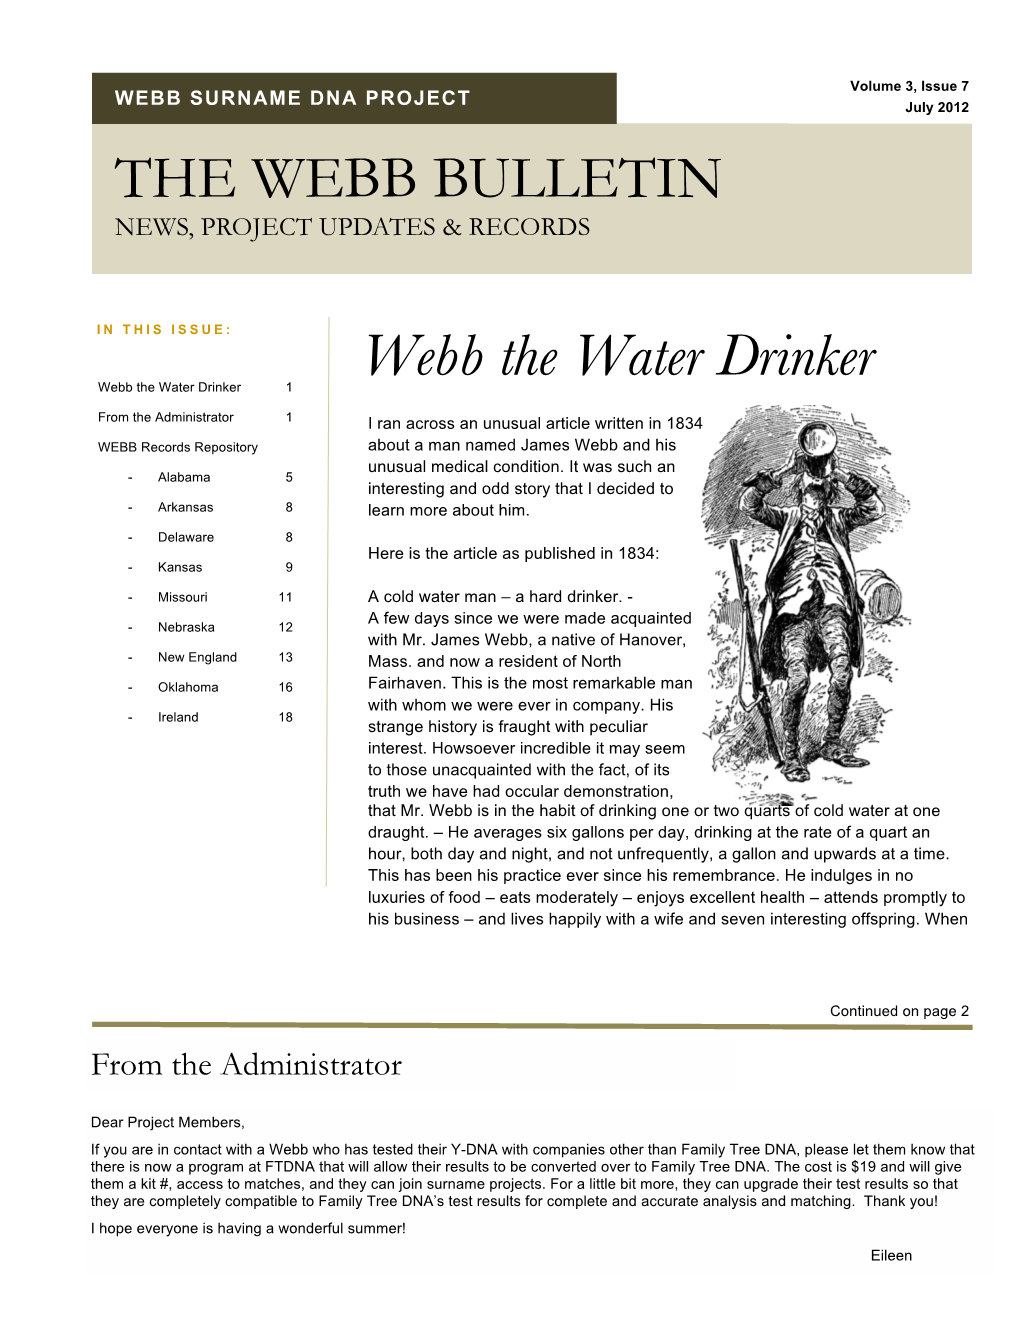 WSDP WEBB BULLETIN Vol 3 Issue